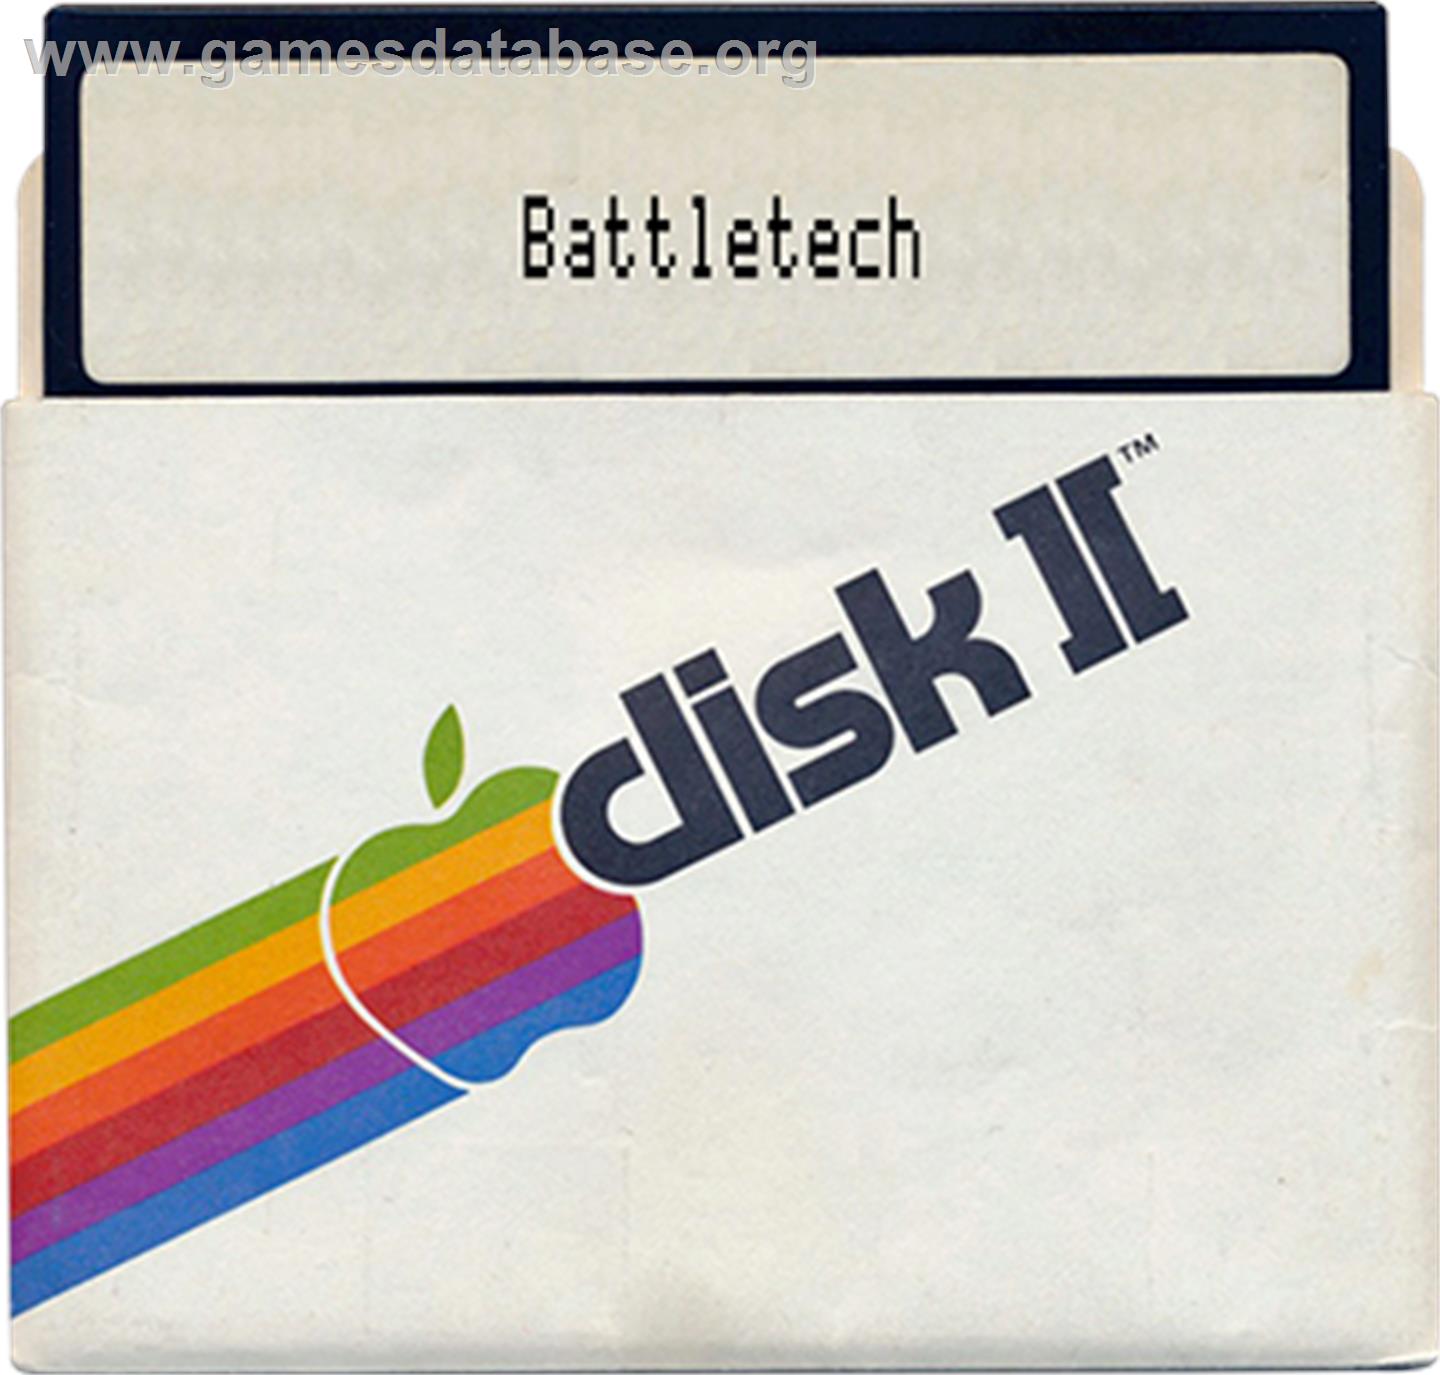 Battletech: The Crescent Hawk's Inception - Apple II - Artwork - Disc